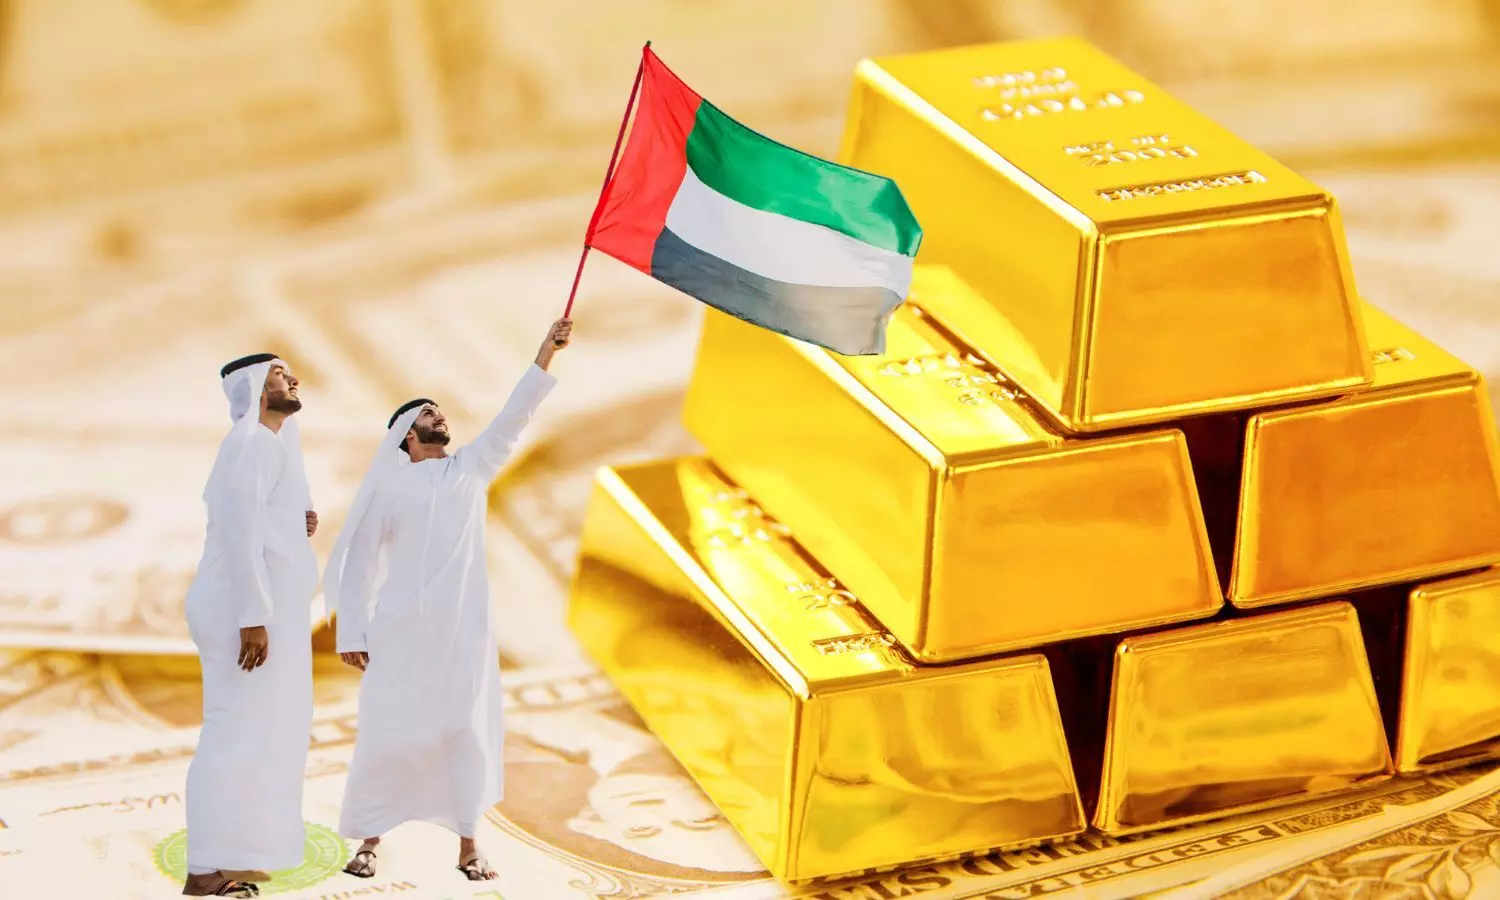 UAE men and UAE flag, GOLD Bars